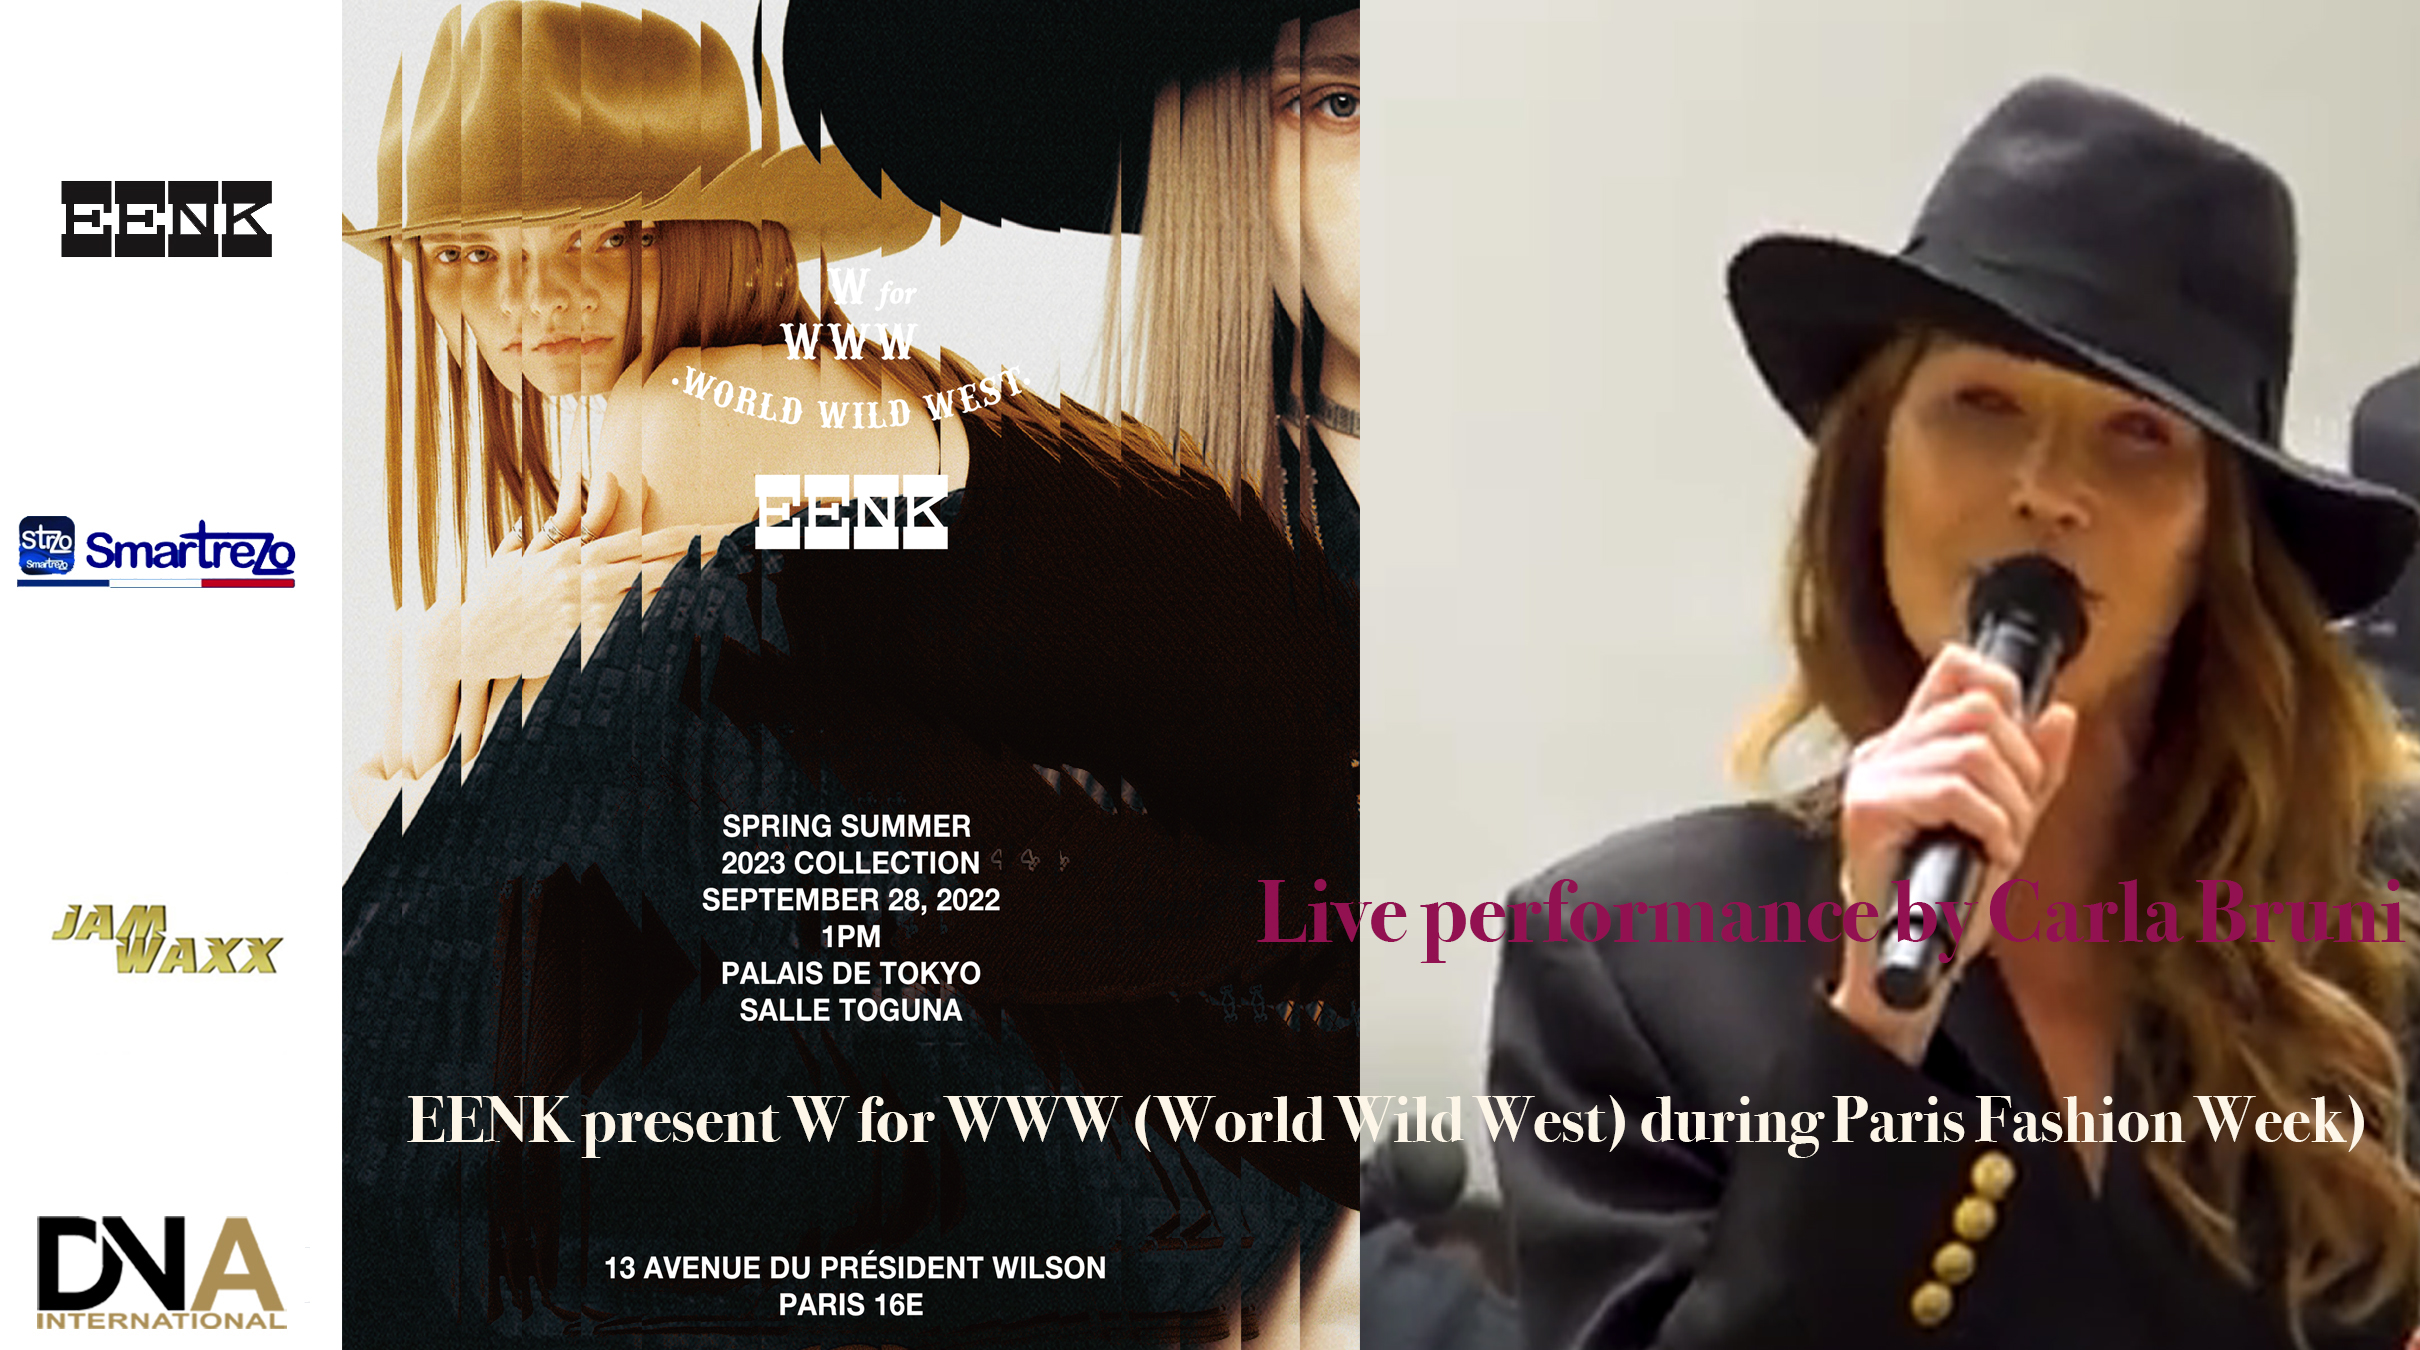 DN-AFRICA-EENK-present-W-for-WWW--World-Wild-West-as-a-part-of-Paris-Fashion-Week--DN-A-INTERNATIONAL-Media-Partenaire